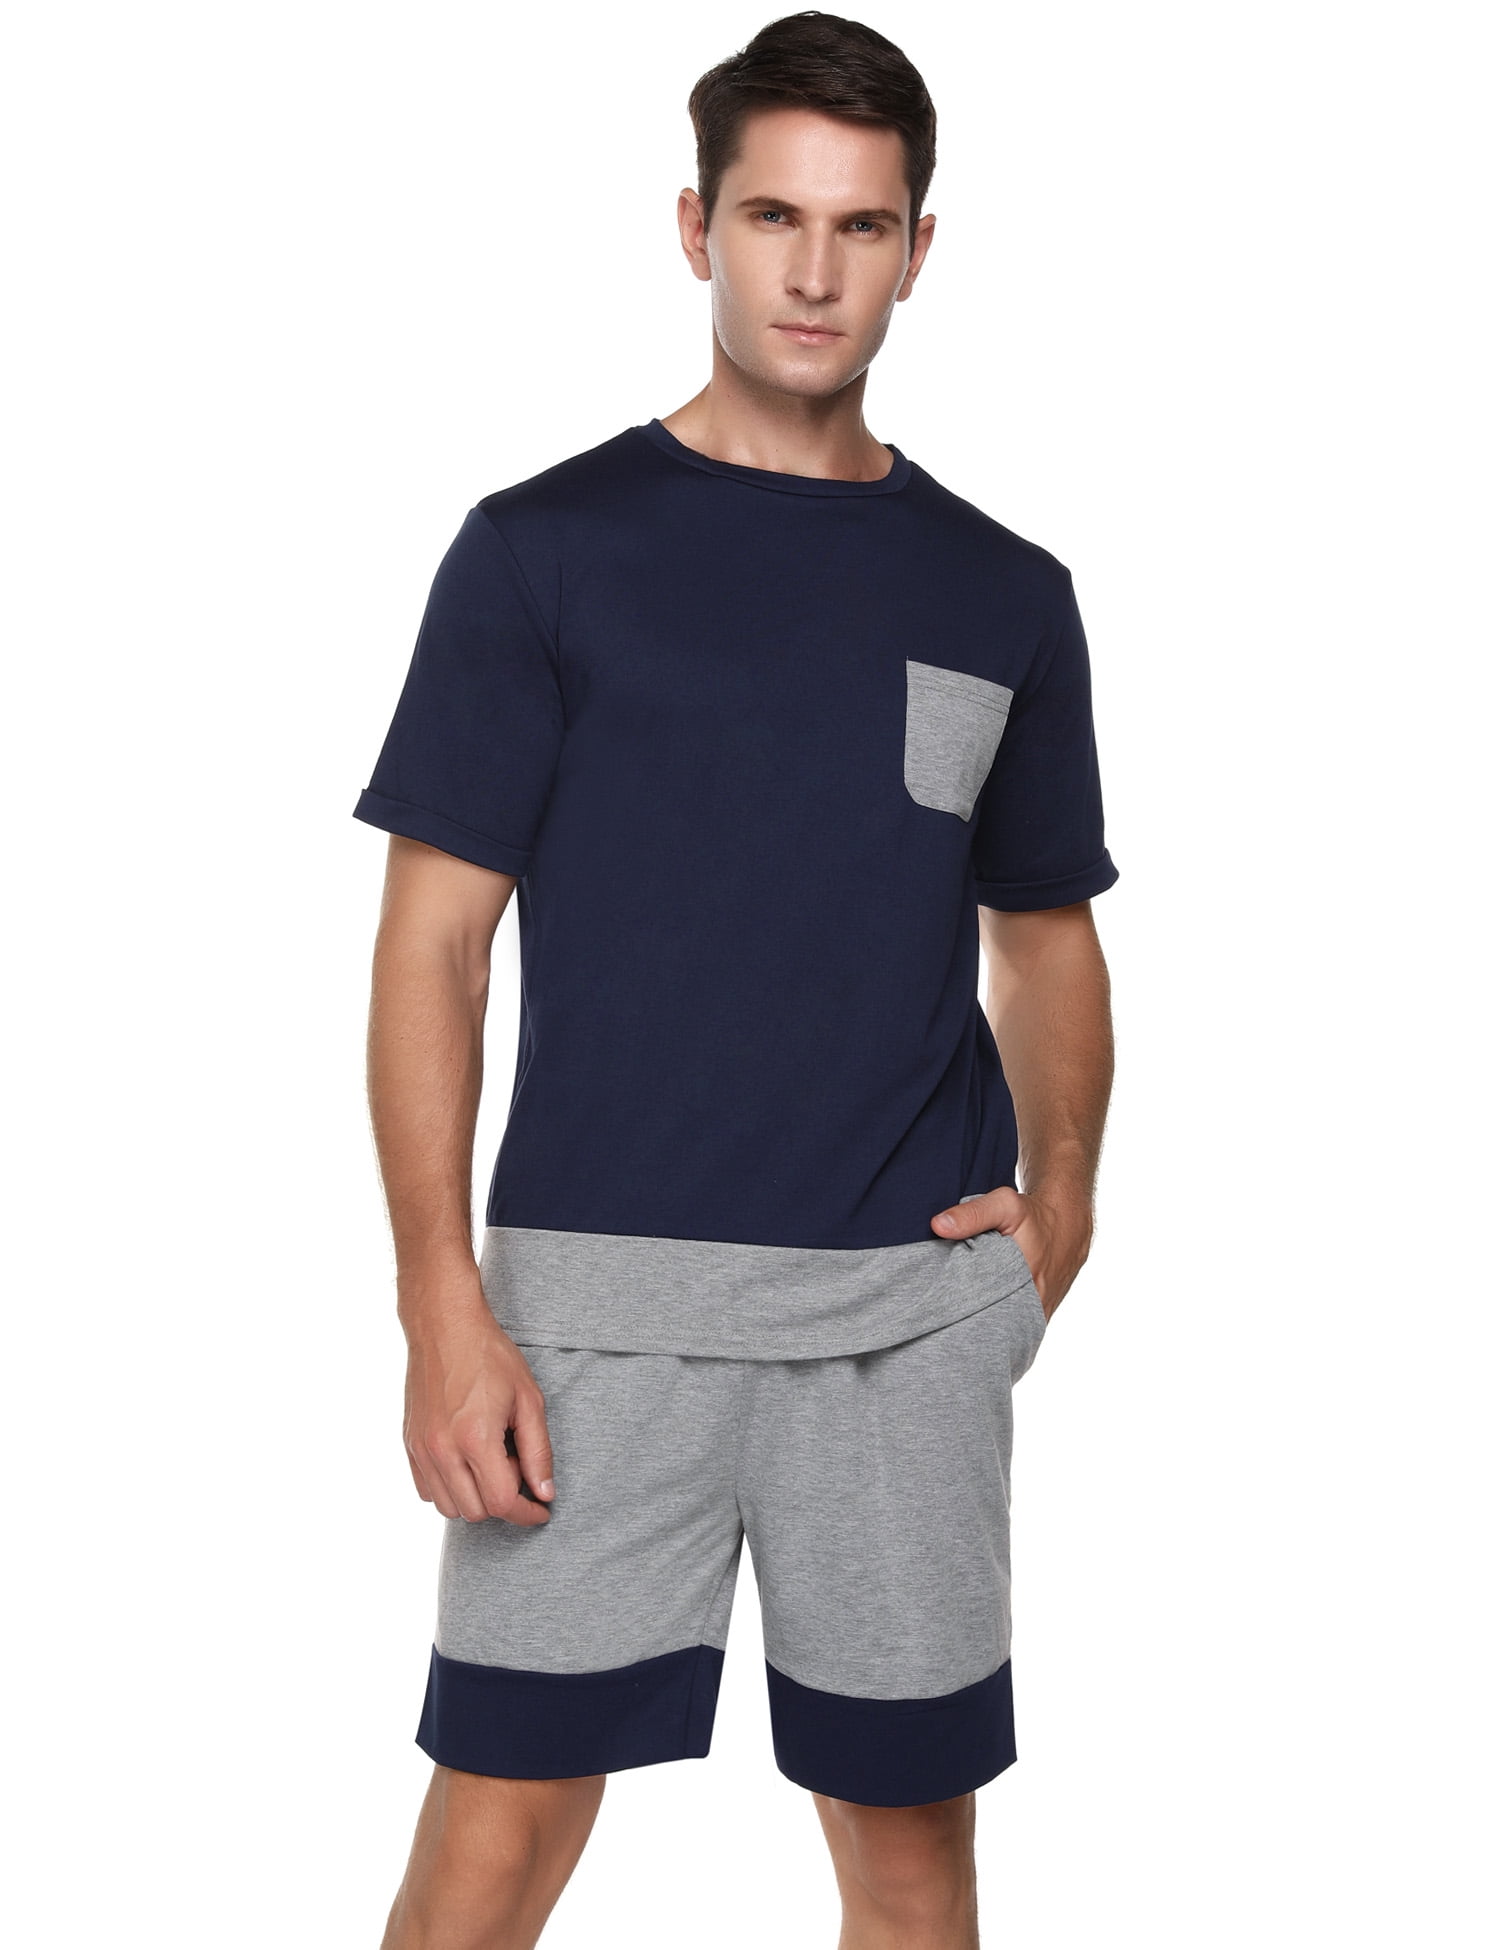 iClosam Mens Pajama Set Cotton Pyjamas Short Sleeve Loungewear Summer Classic Striped Shorts & Shirt Sleepwear PJ Set for Men S-XXL 